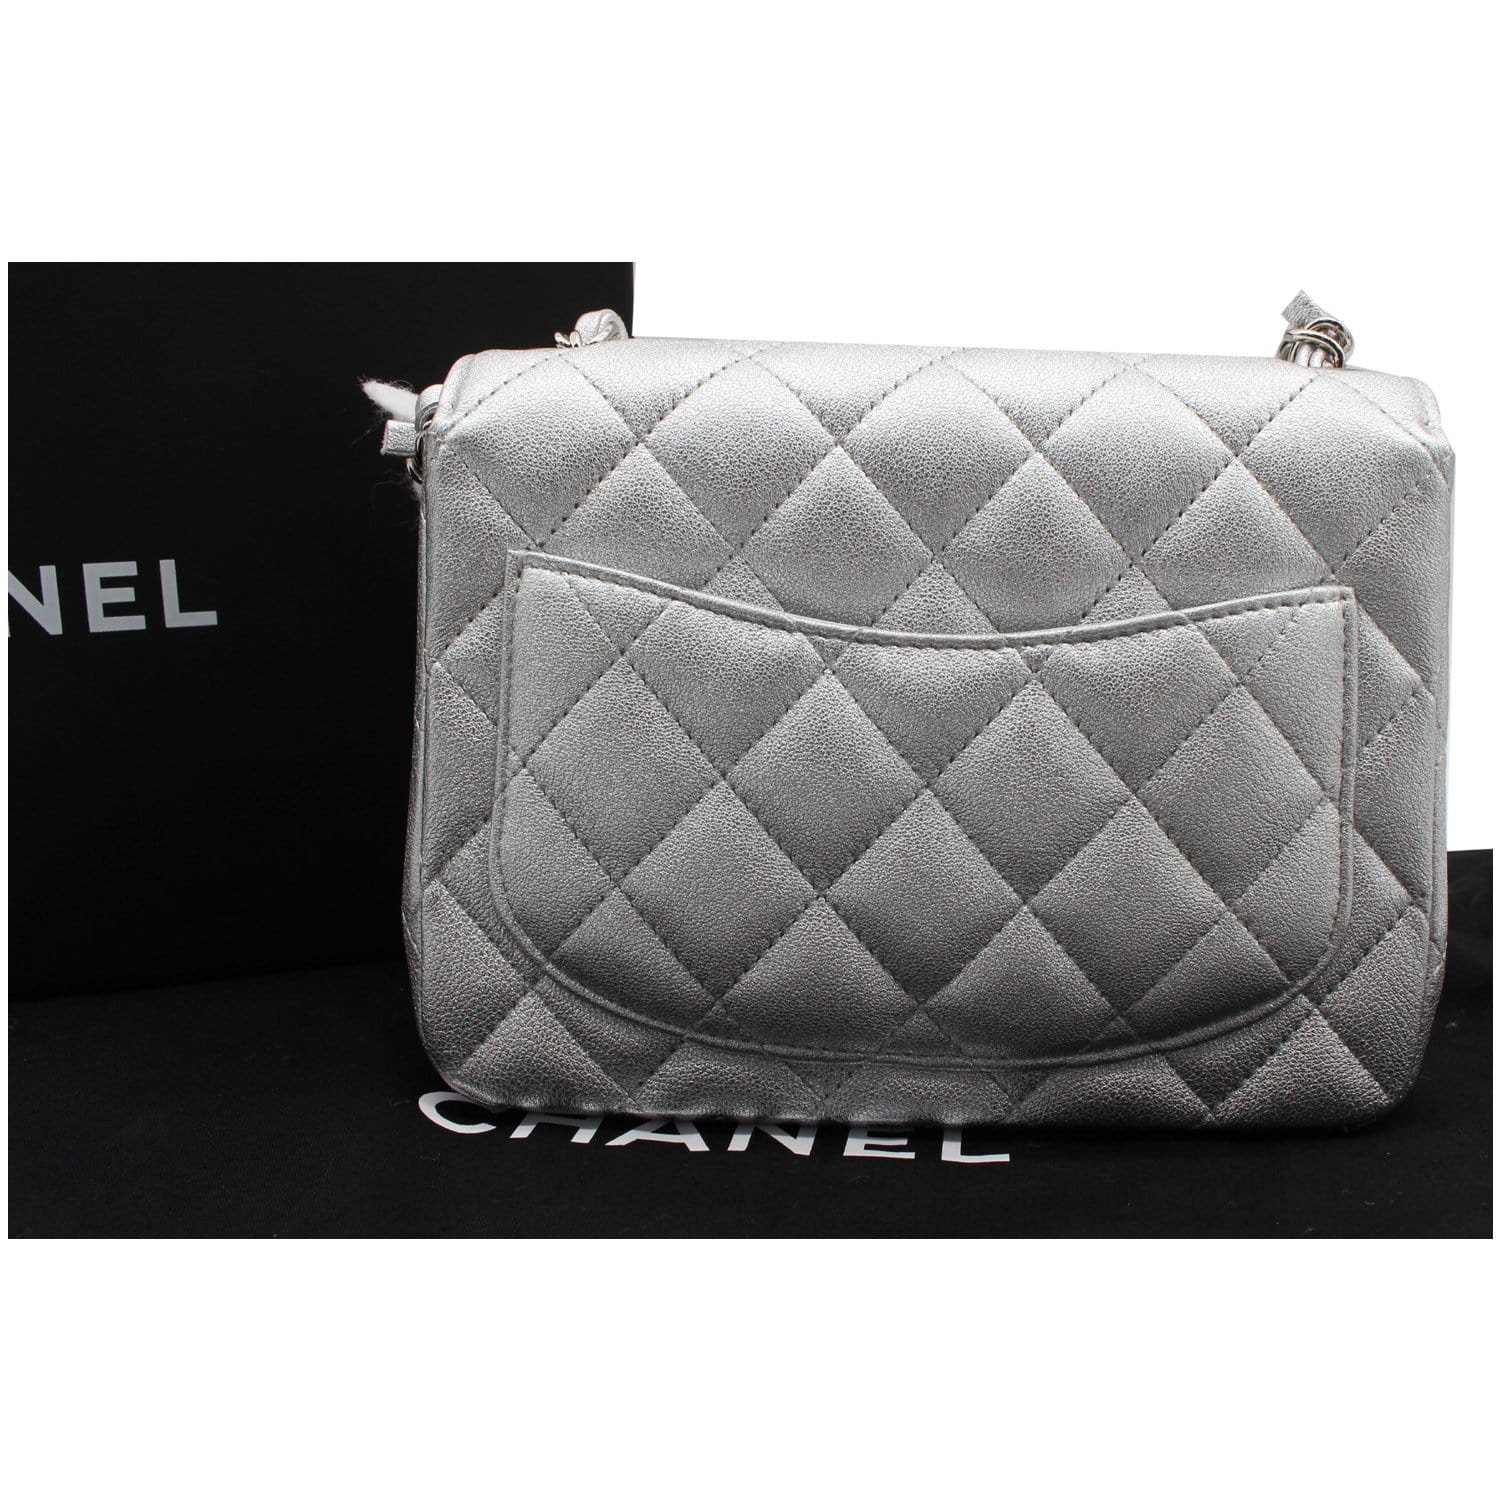 CHANEL bag review - mini rectangular black lambskin CHANEL bag